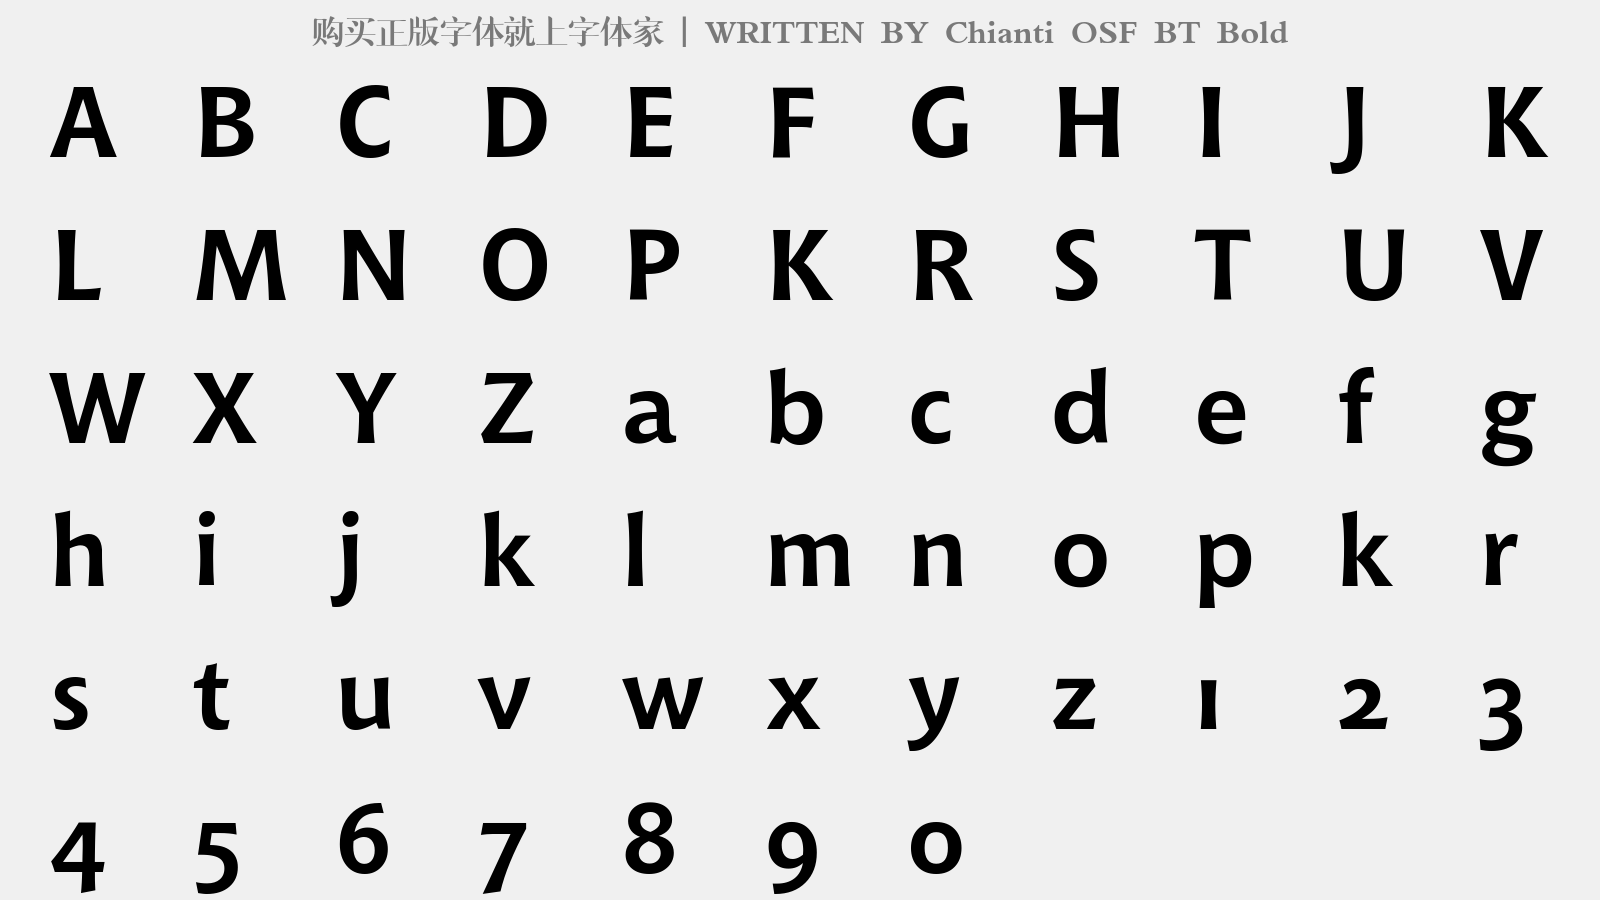 Chianti OSF BT Bold - 大写字母/小写字母/数字